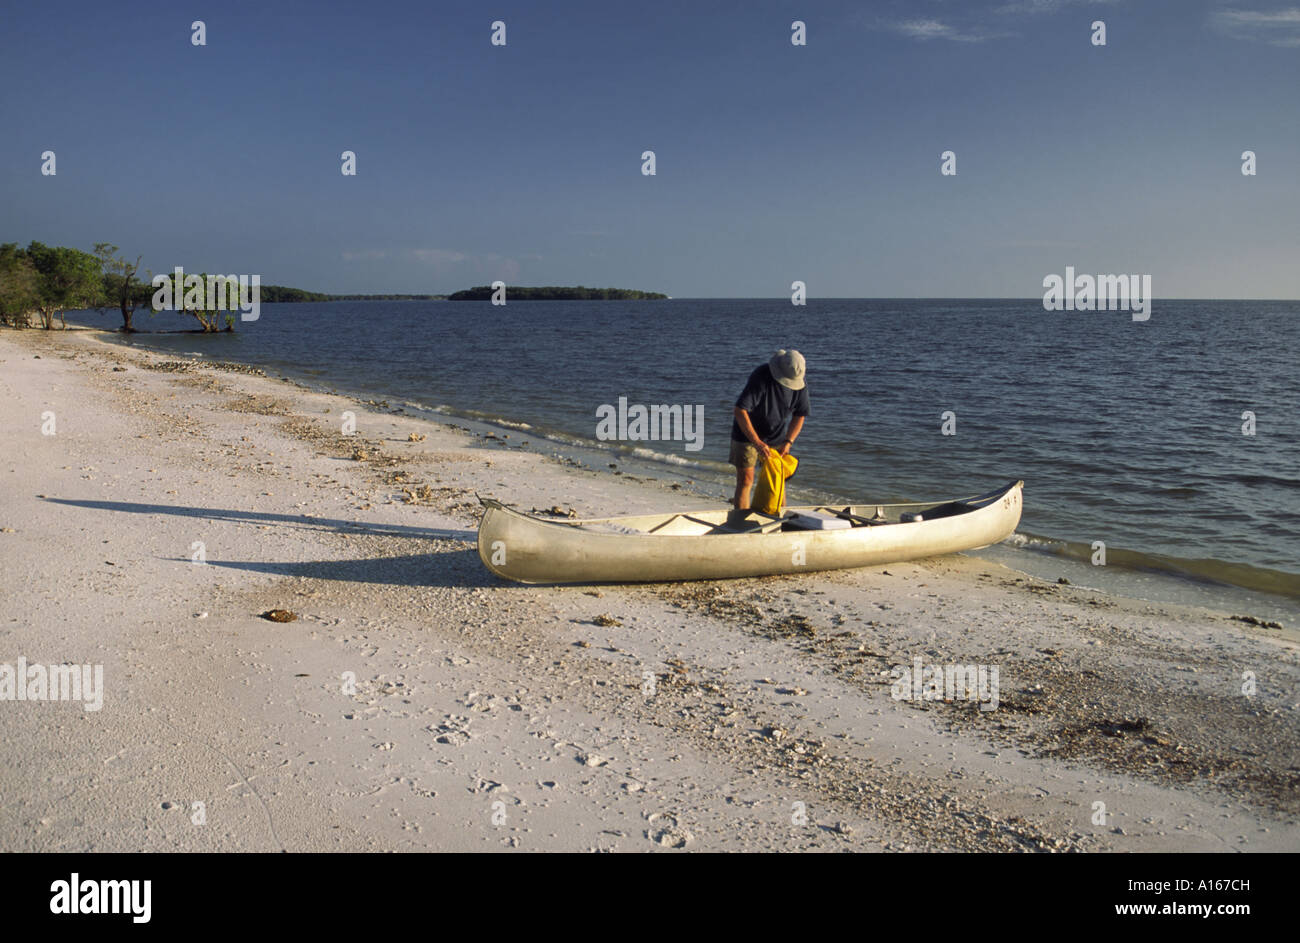 Canoeist on beach at Picnic Key, Ten Thousand Islands, Everglades Nat Park, Florida, USA Stock Photo